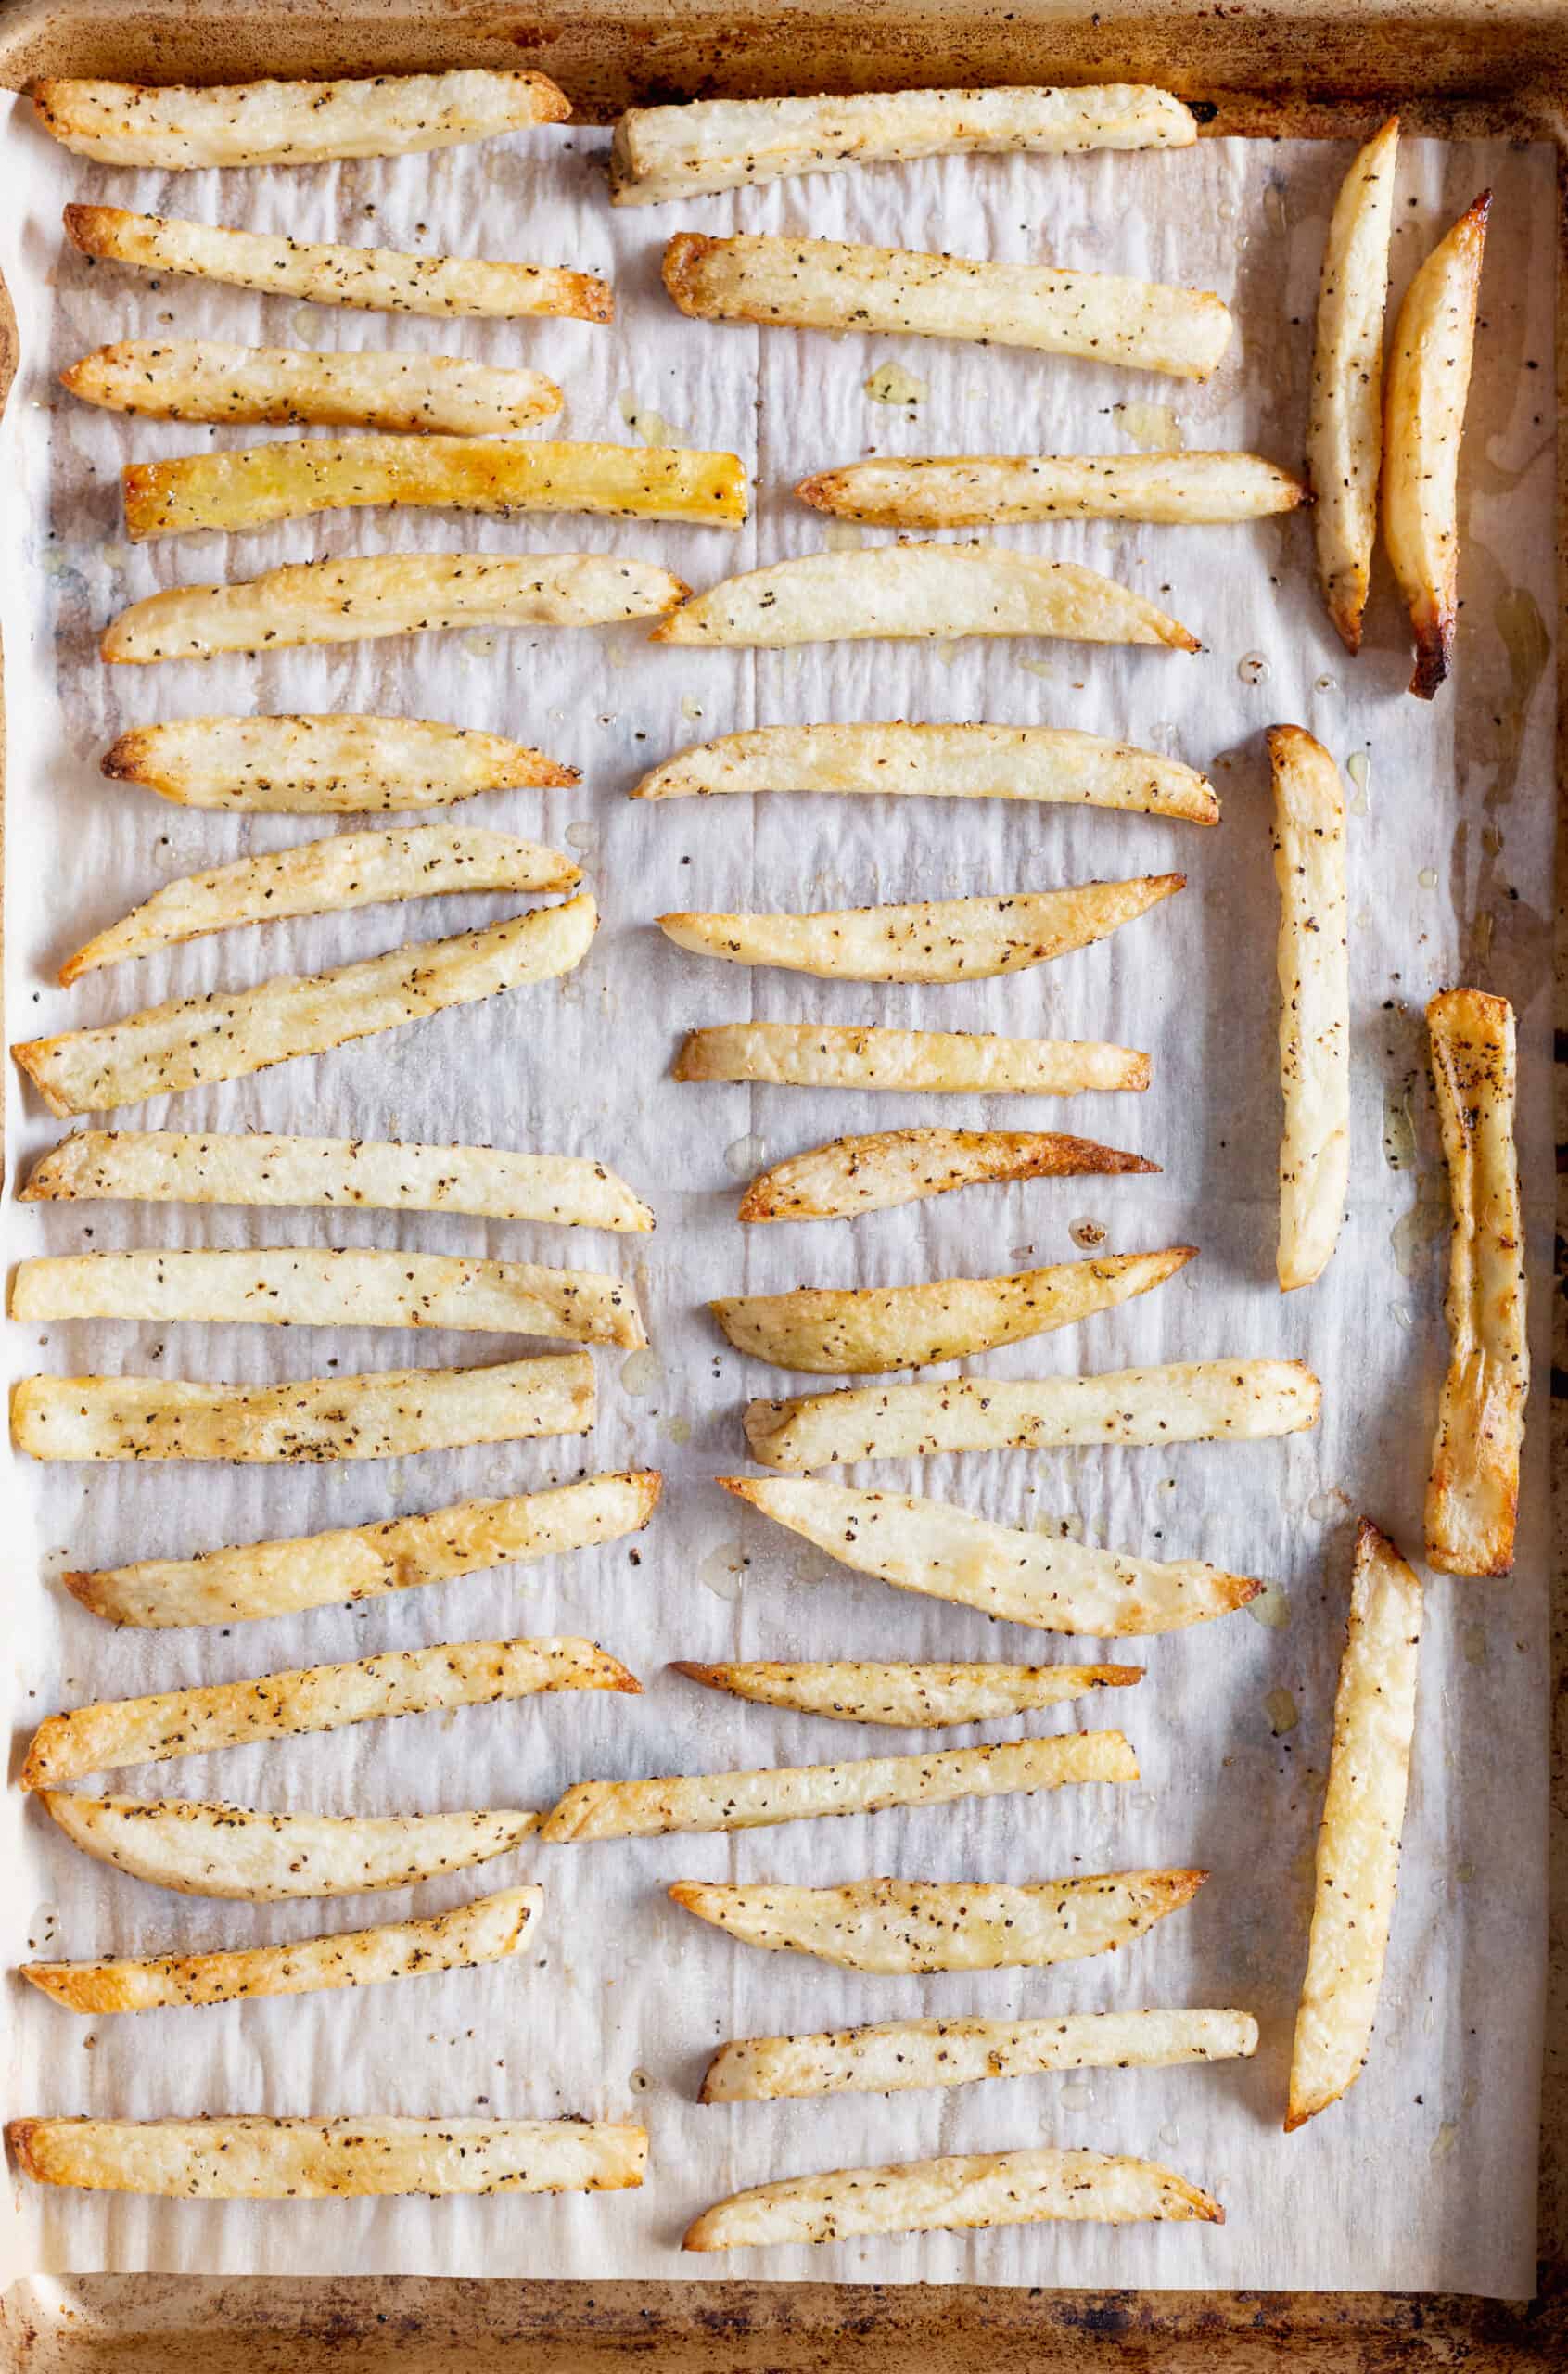 baked cut fries on a sheet pan